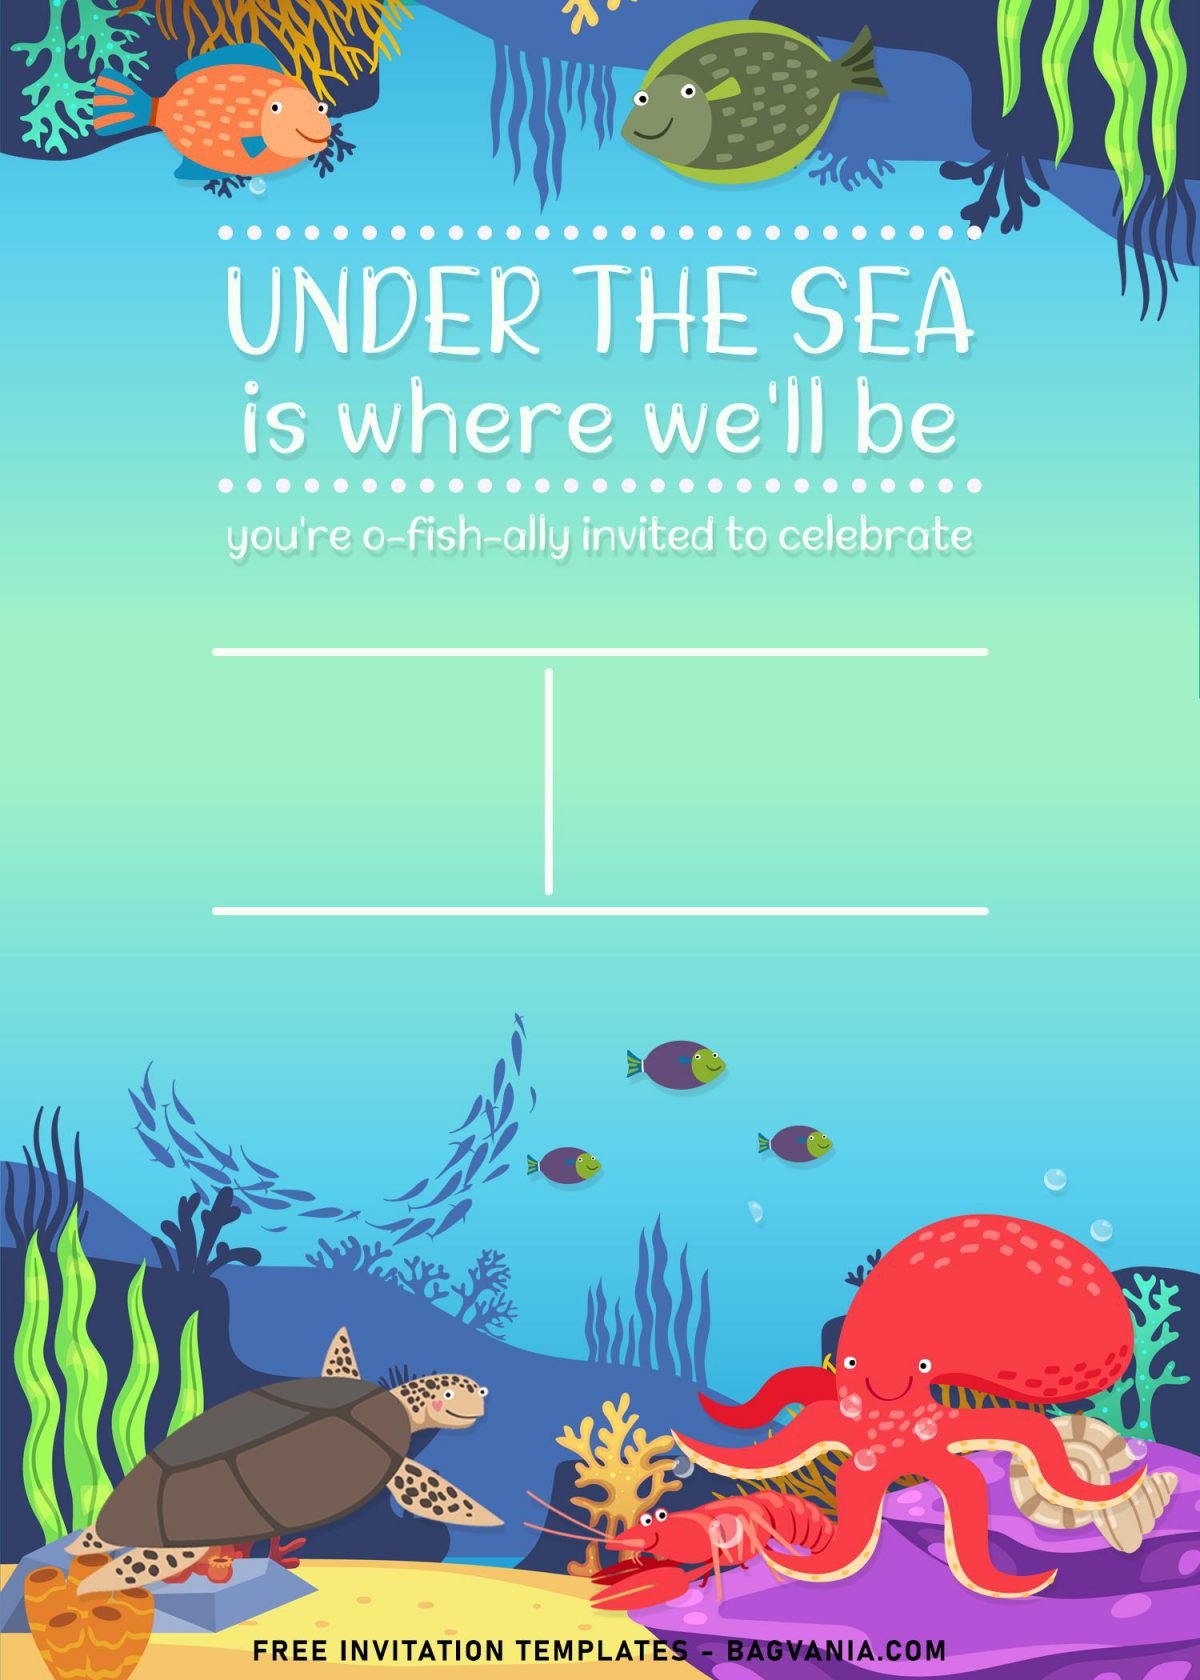 9+ Under The Sea Themed Birthday Invitation Templates and has Cute Nemo fish